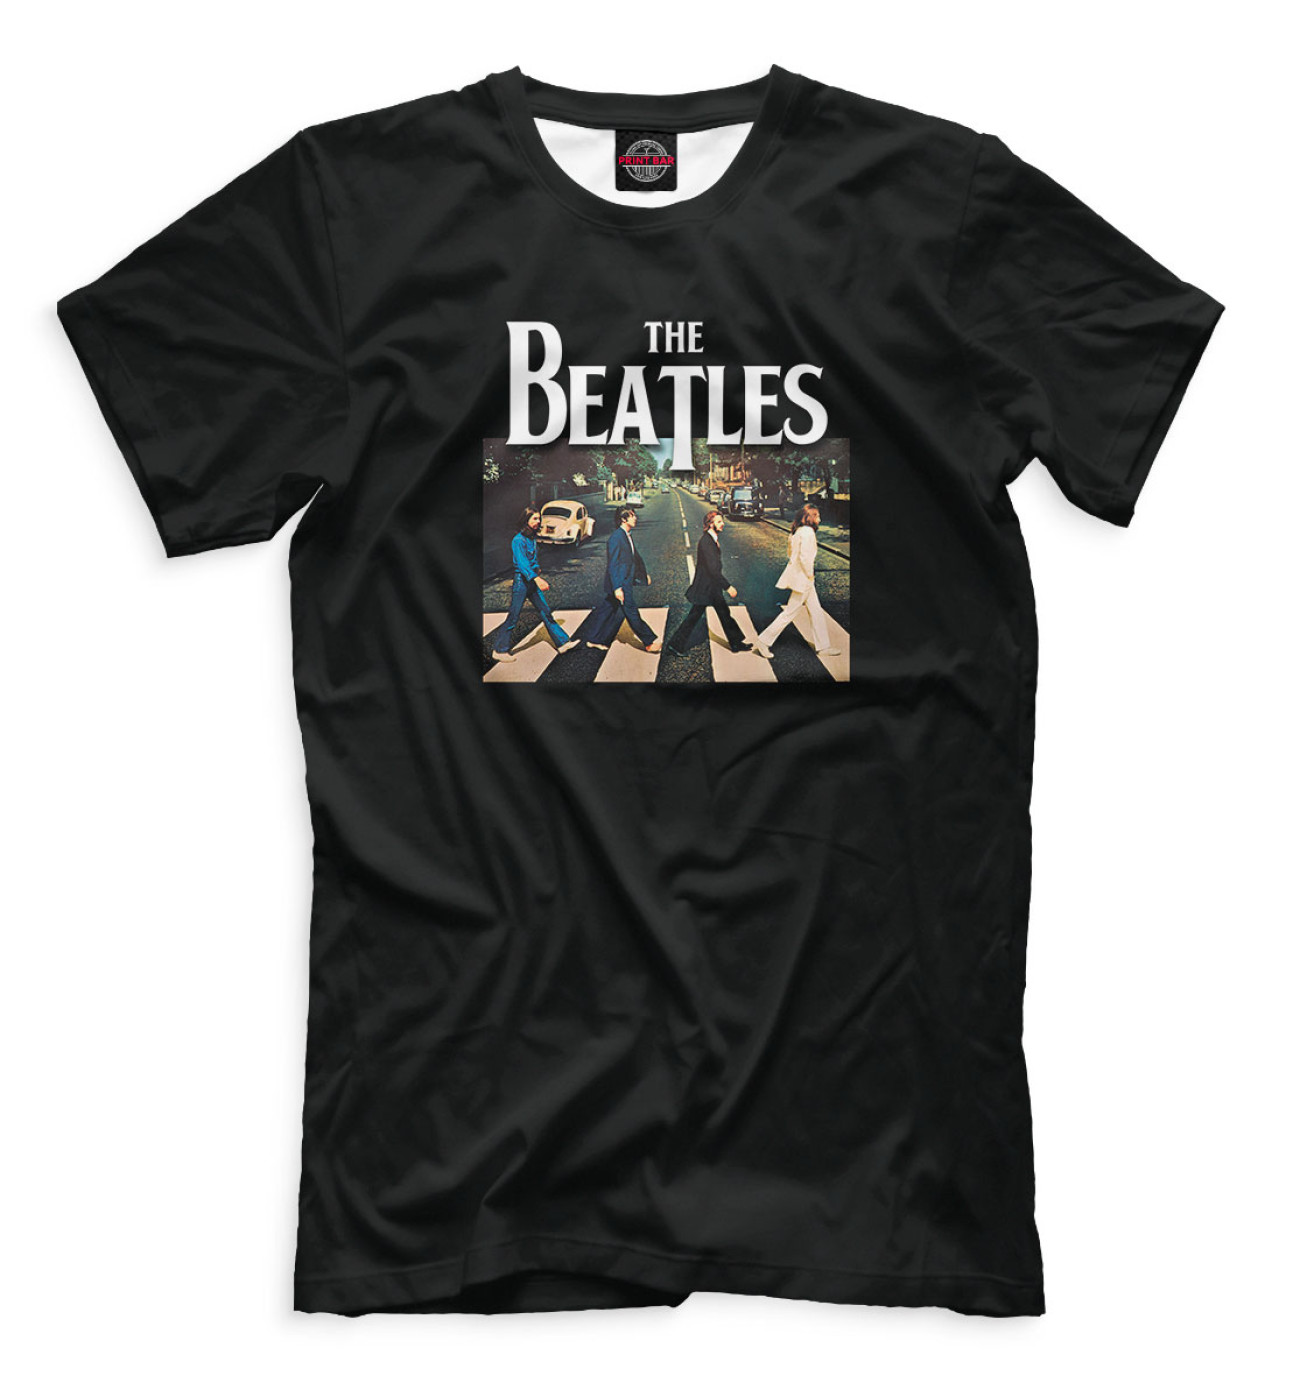 Мужская Футболка Abbey Road - The Beatles, артикул: BTS-439679-fut-2